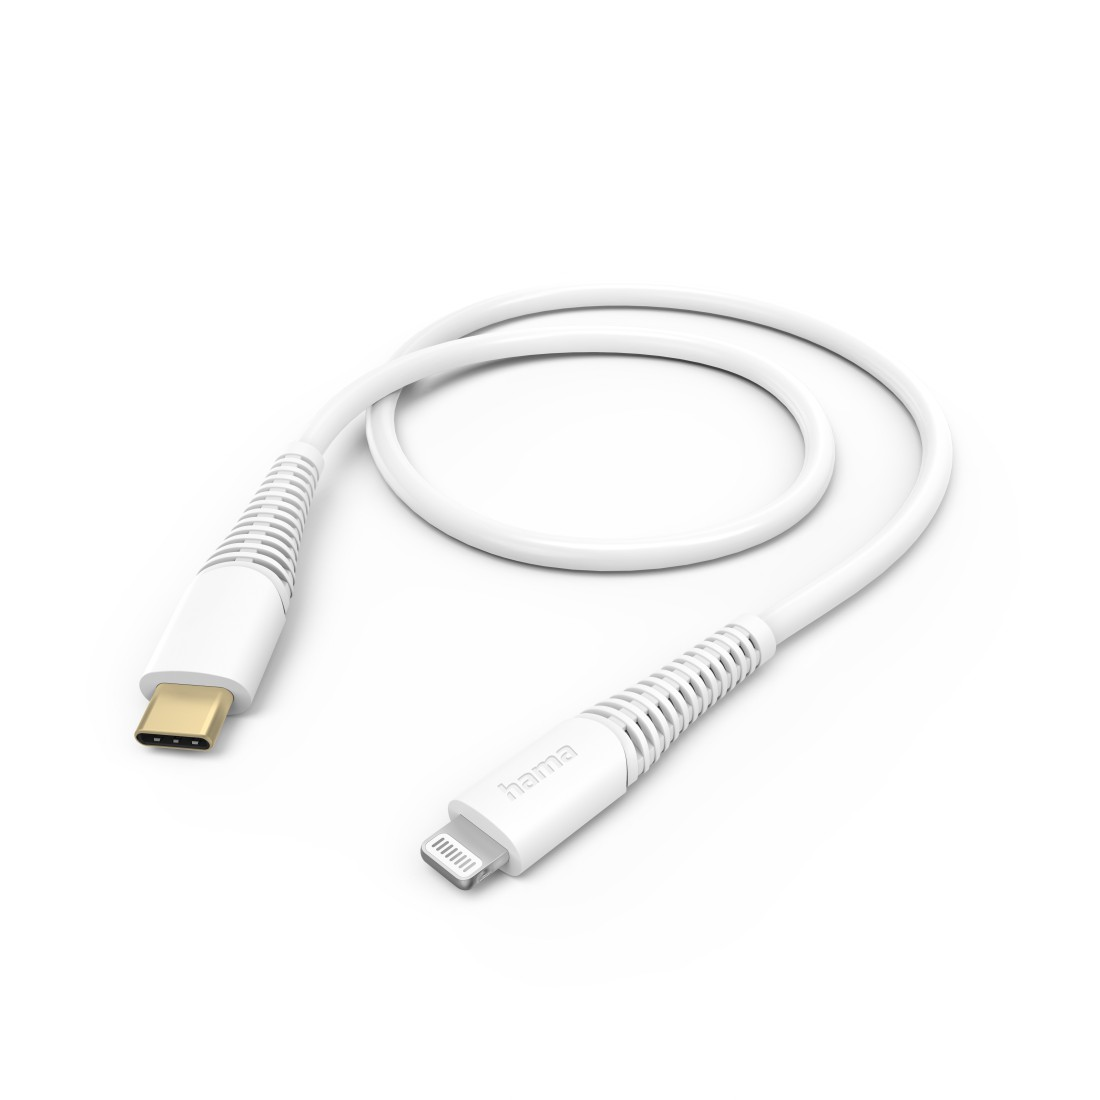 m, USB-C, Ladekabel, 1,5 Lightning HAMA auf Weiß